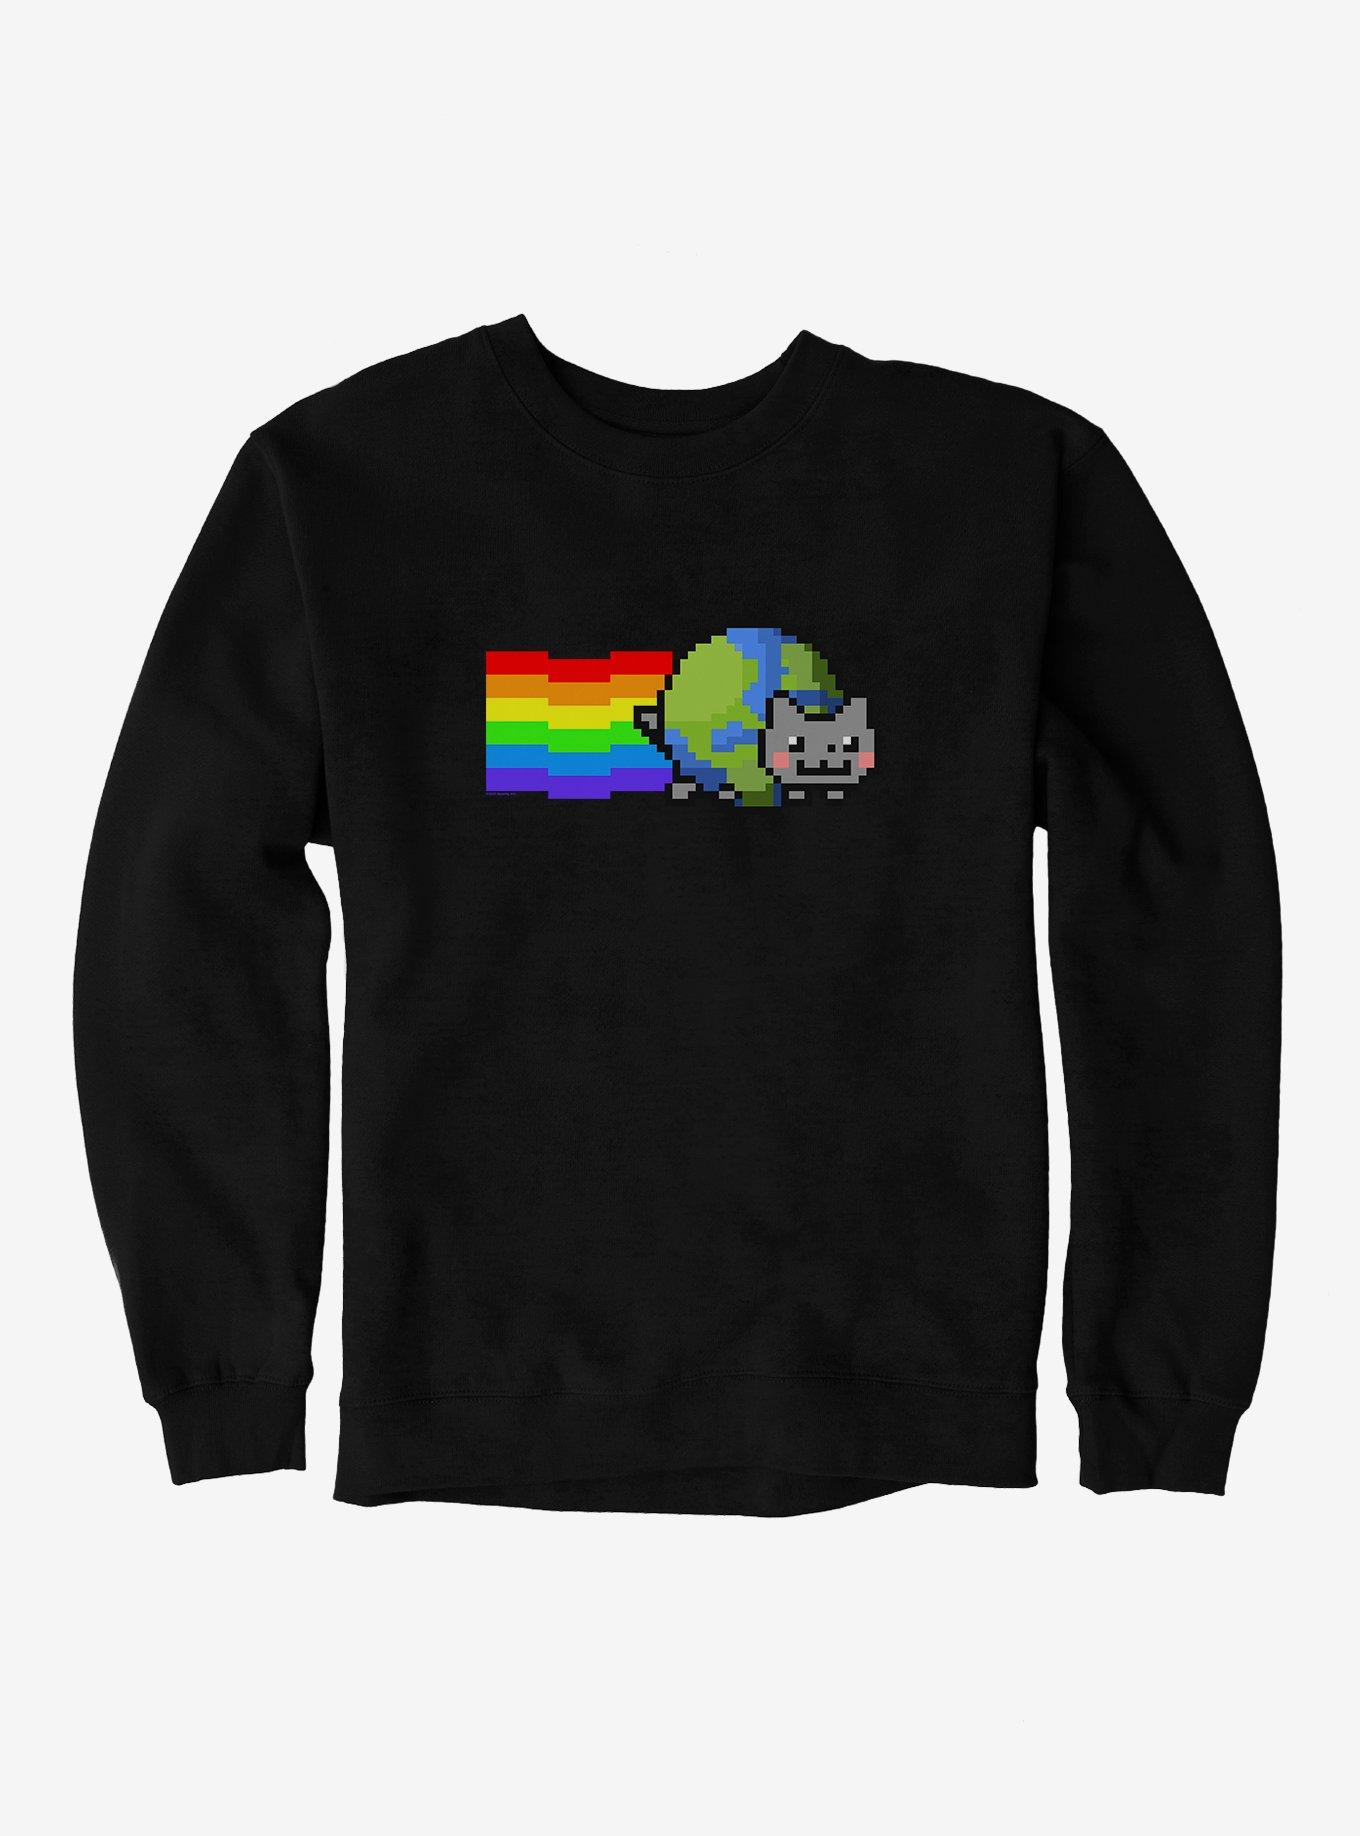 Nyan Cat World Sweatshirt, , hi-res